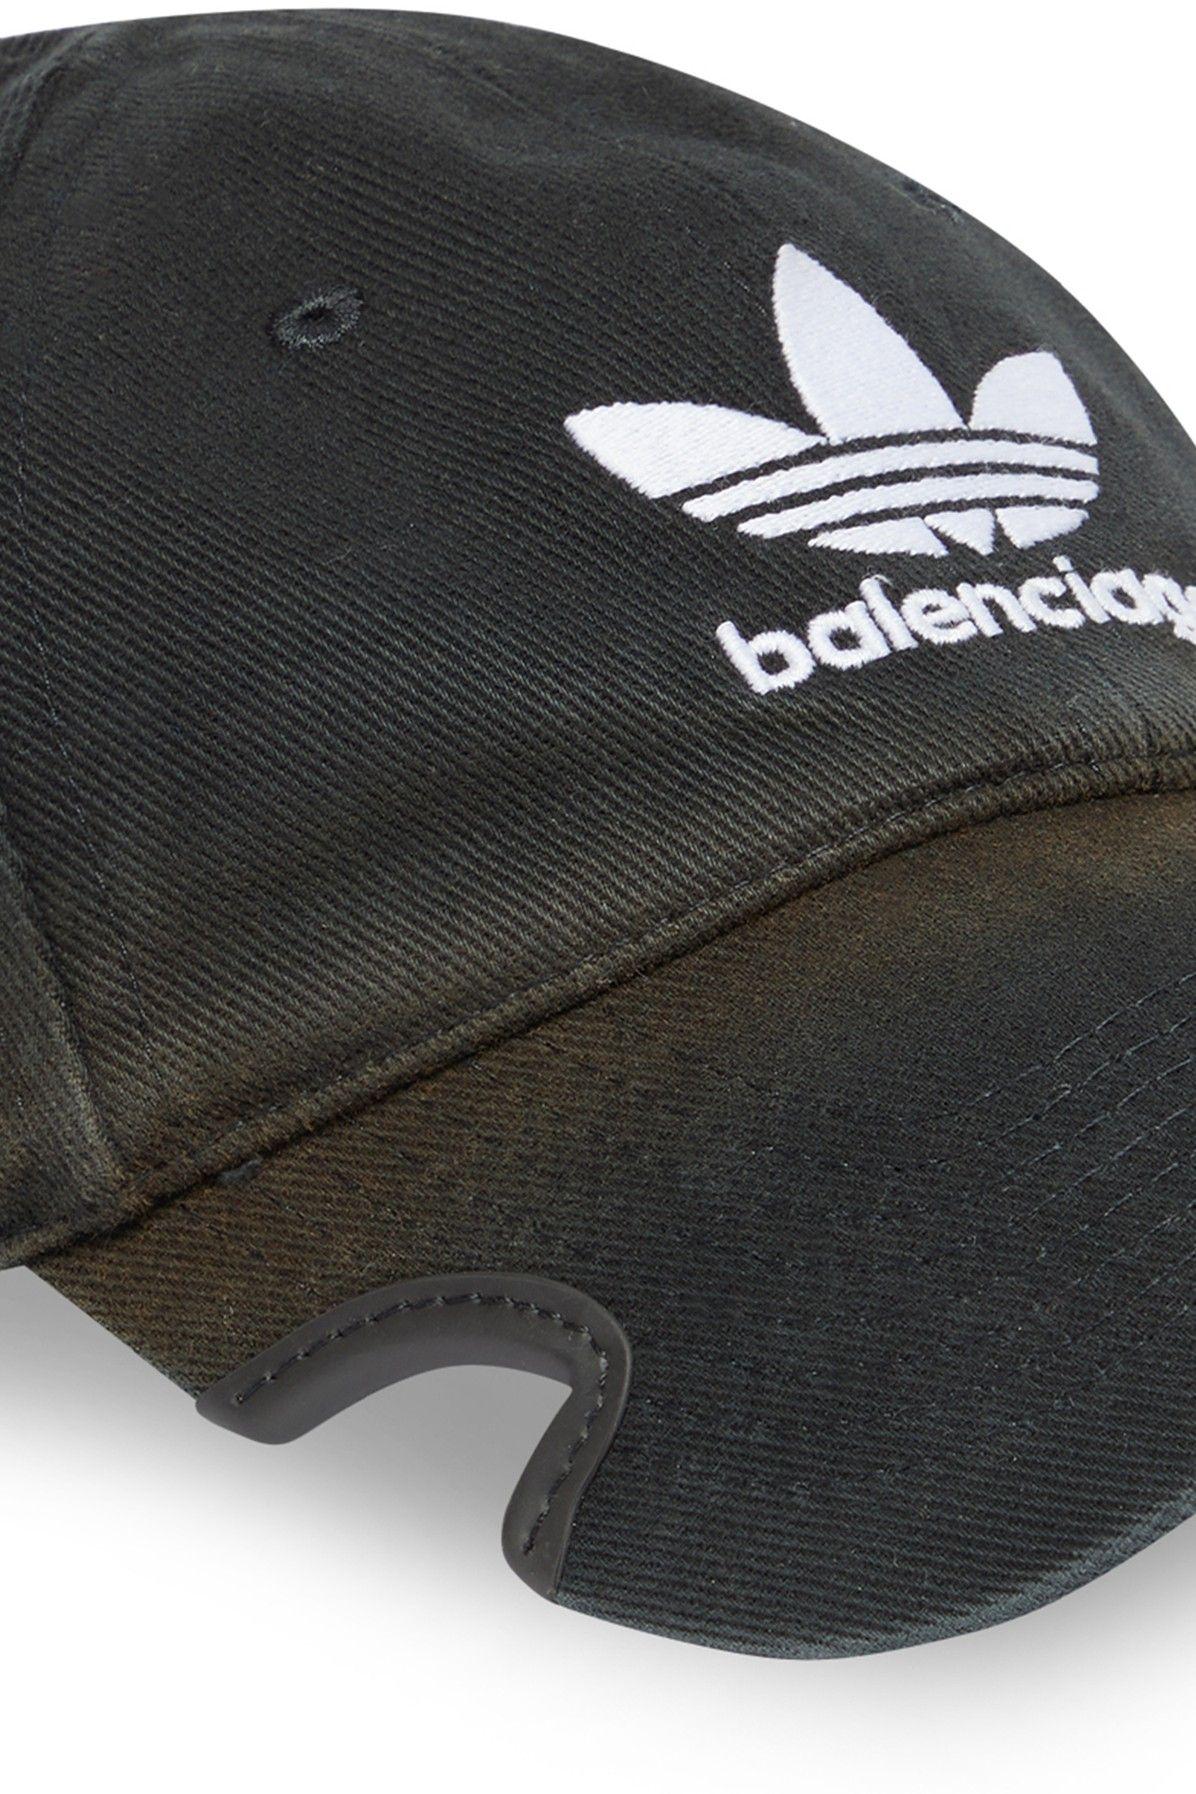 BALENCIAGA × adidas】ロゴ CAP 帽子 キャップ barrioletras.com